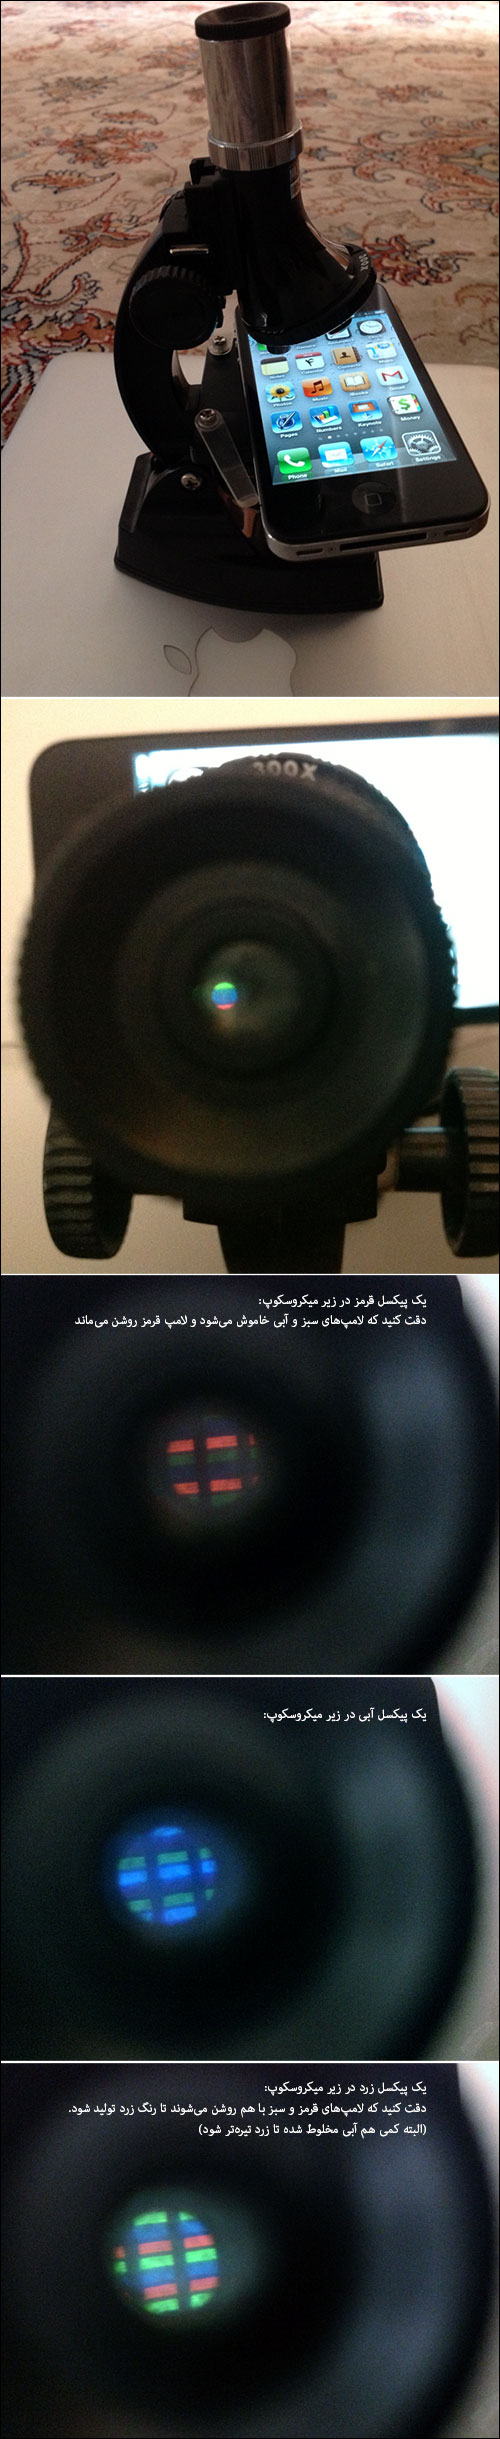 http://img.aftab.cc/news/94/pixels_under_microscope.jpg